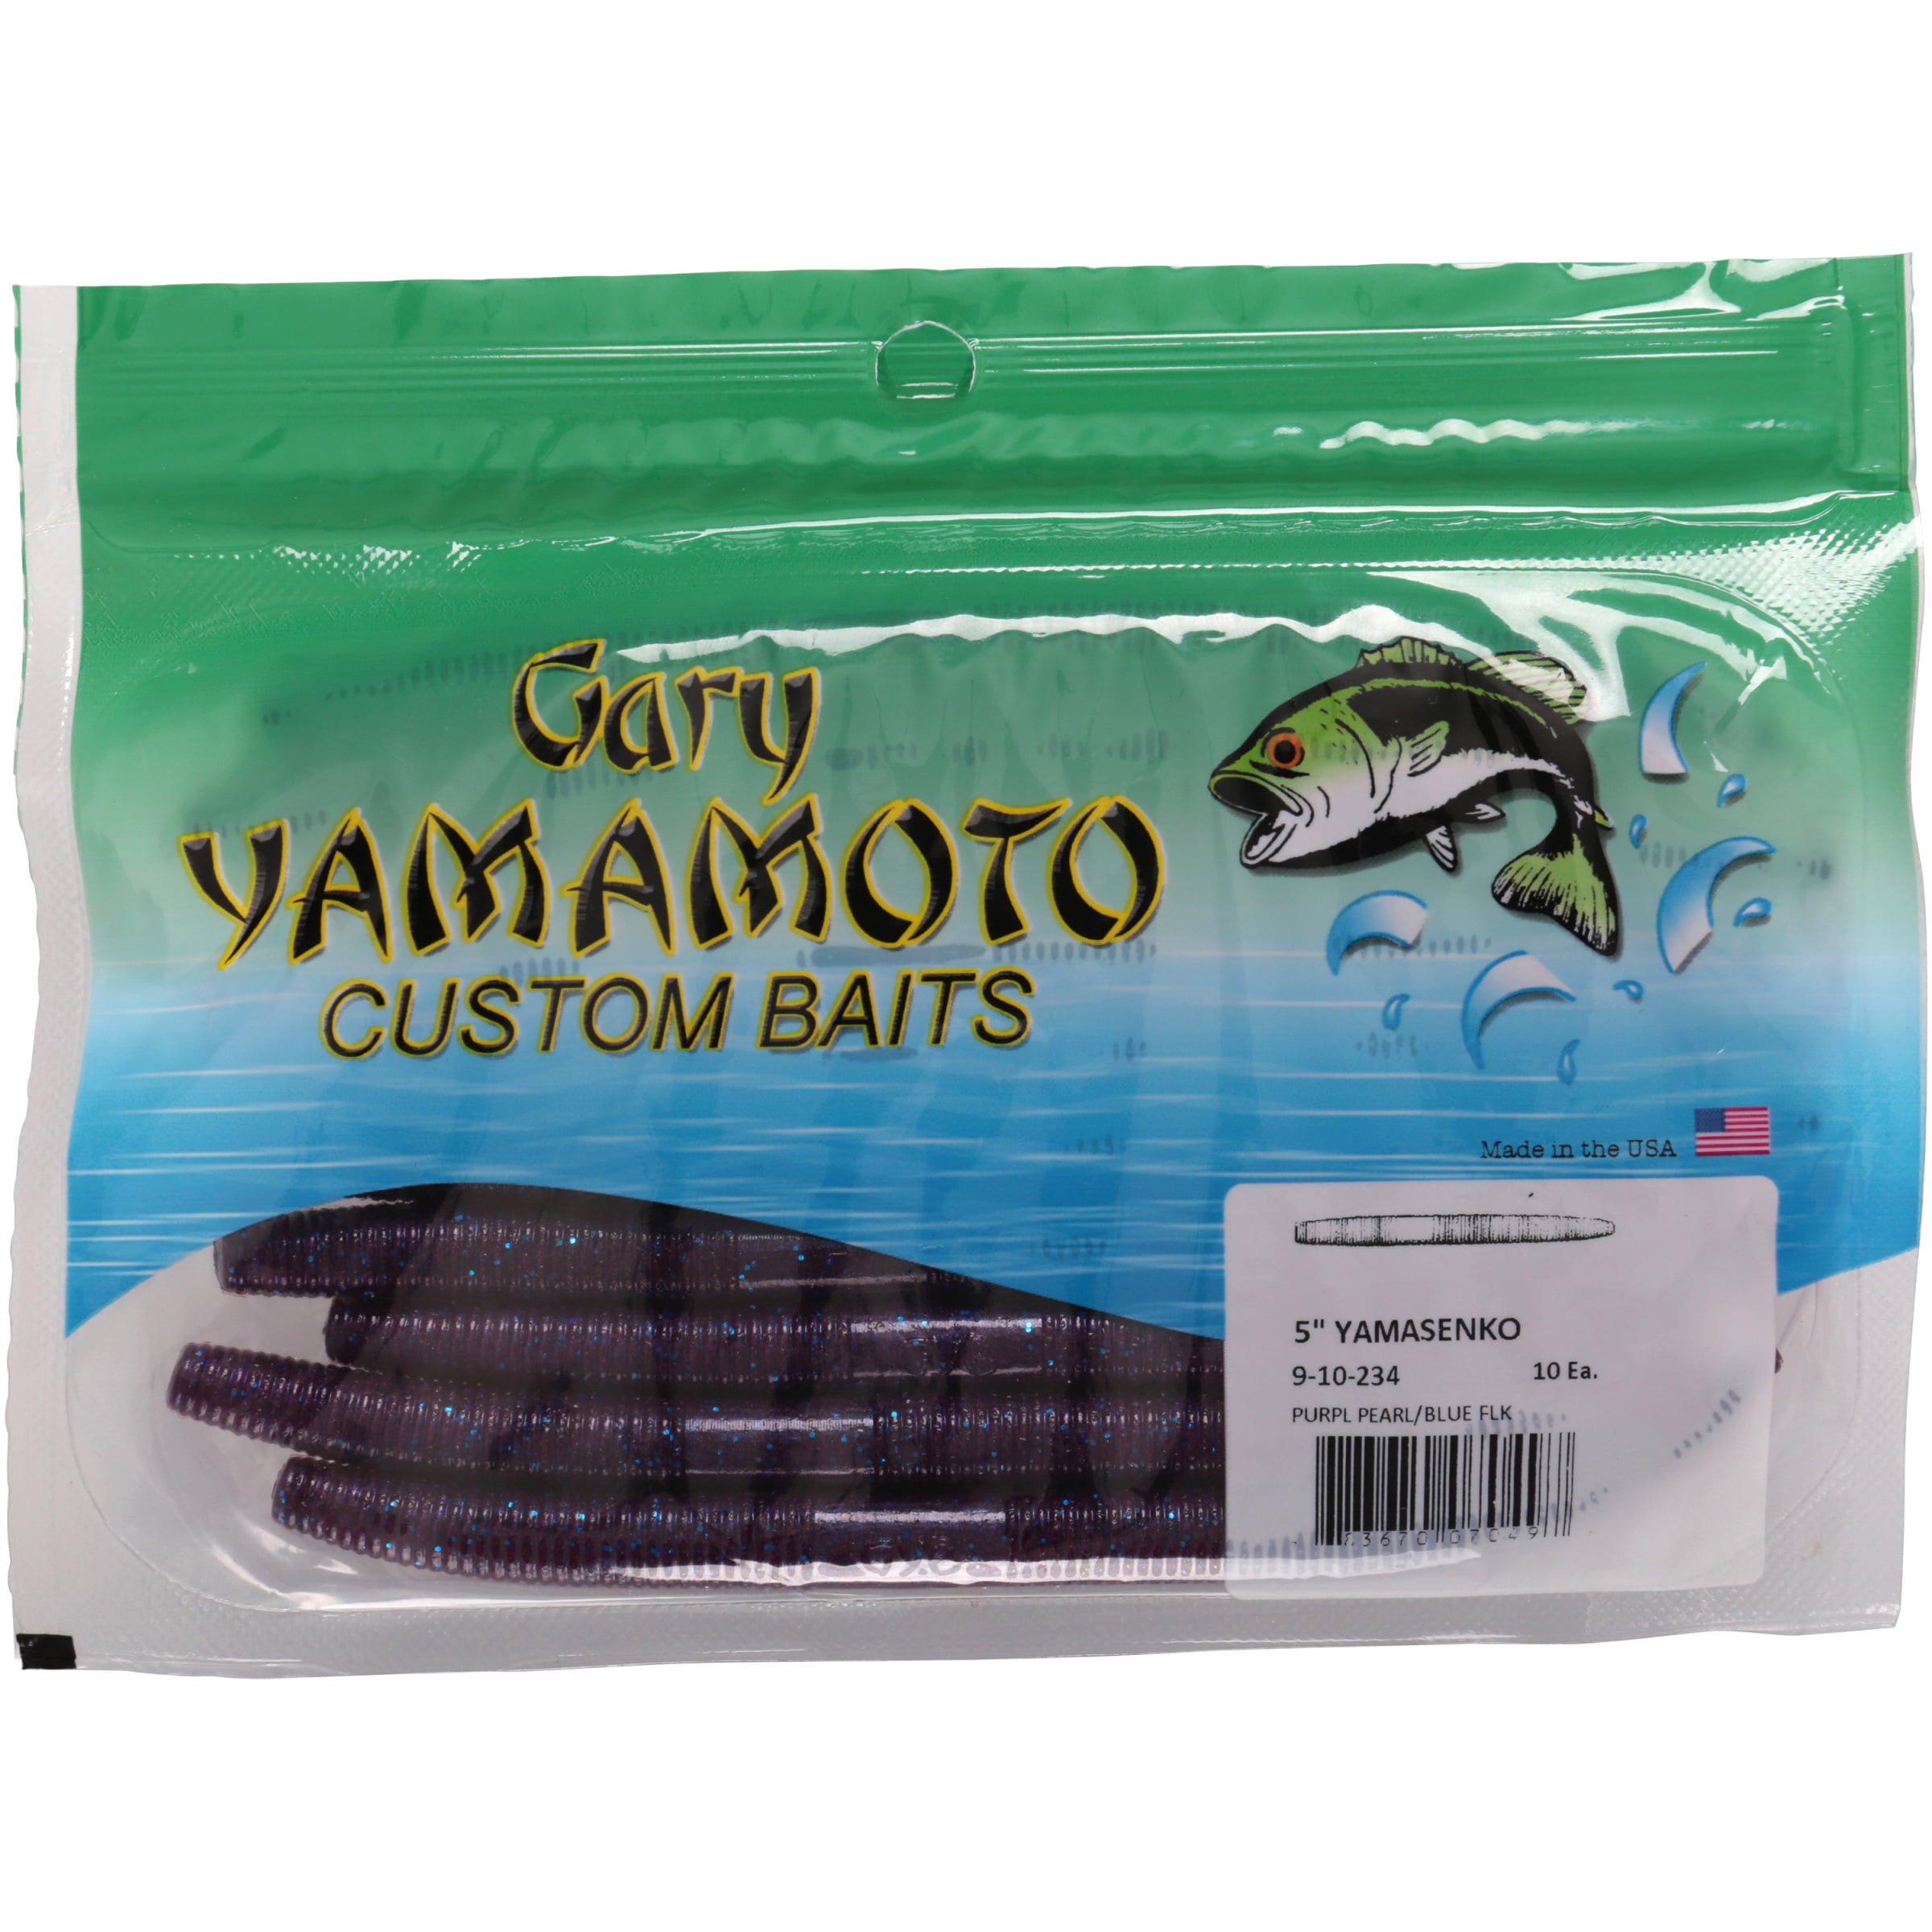 Gary Yamamoto Custom Baits Purple Pearl/Blue Flake 5 Yamasenko 10 ct Bag 